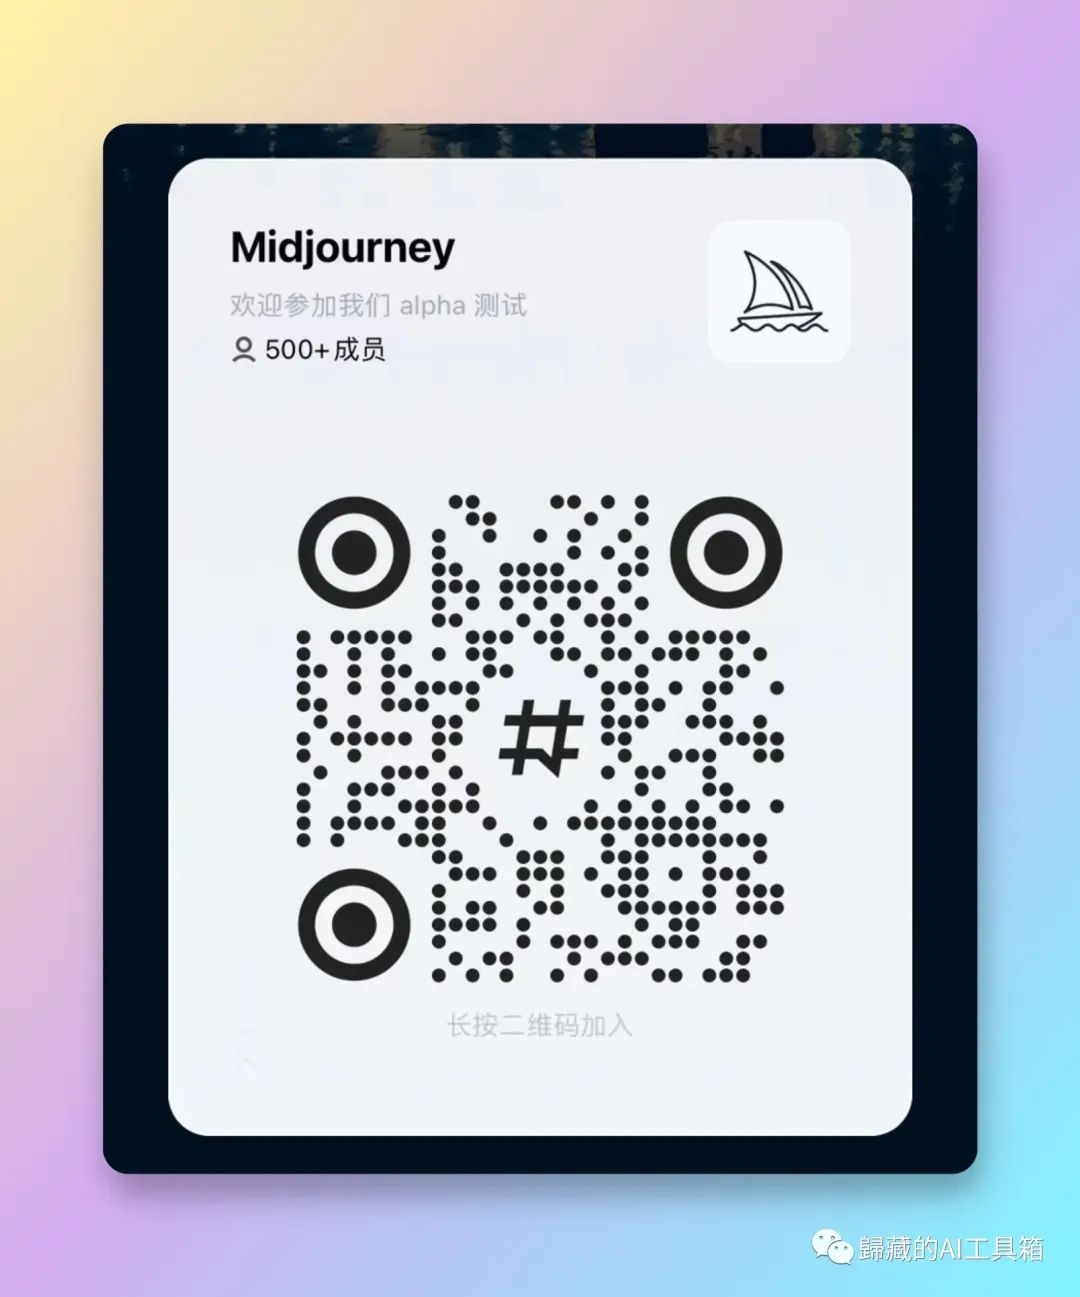 Midjourney中国版本使用指南的配图